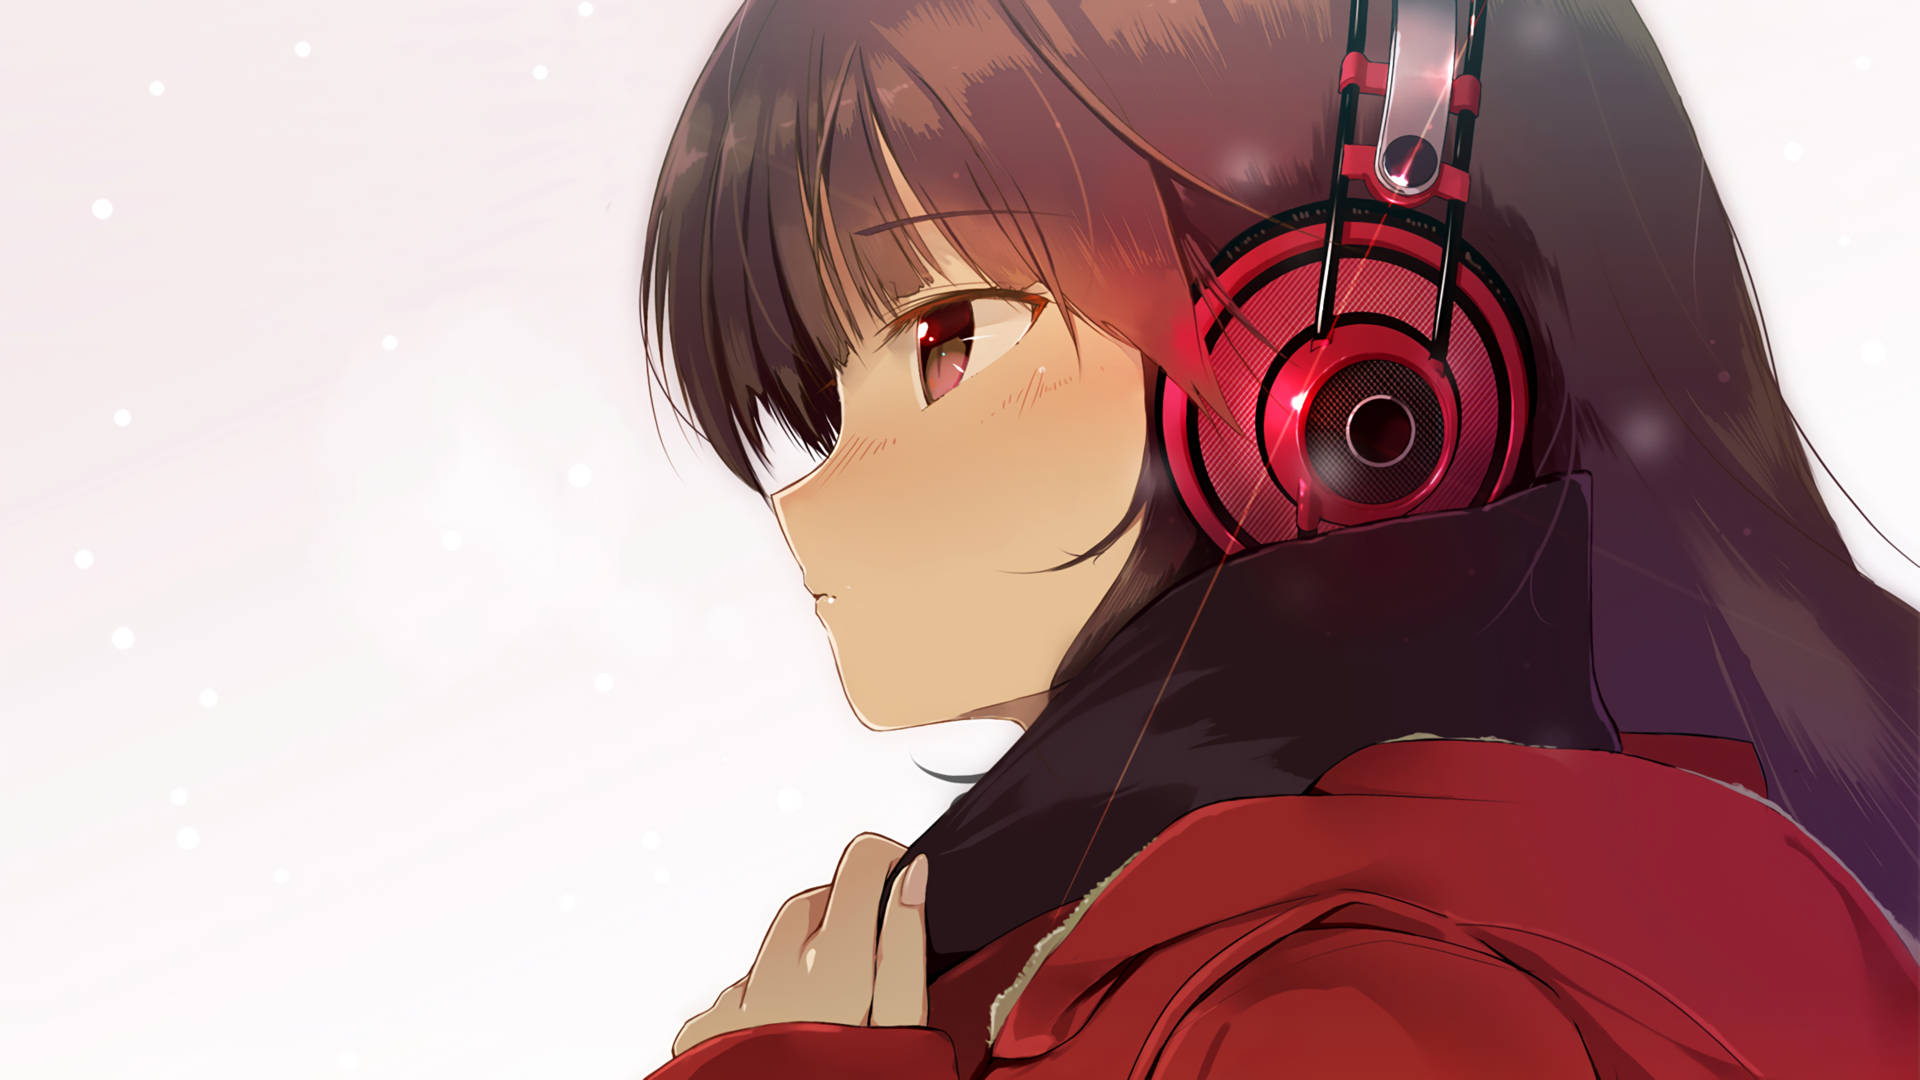 Tomboy Anime Girl With Red Headphones Wallpaper